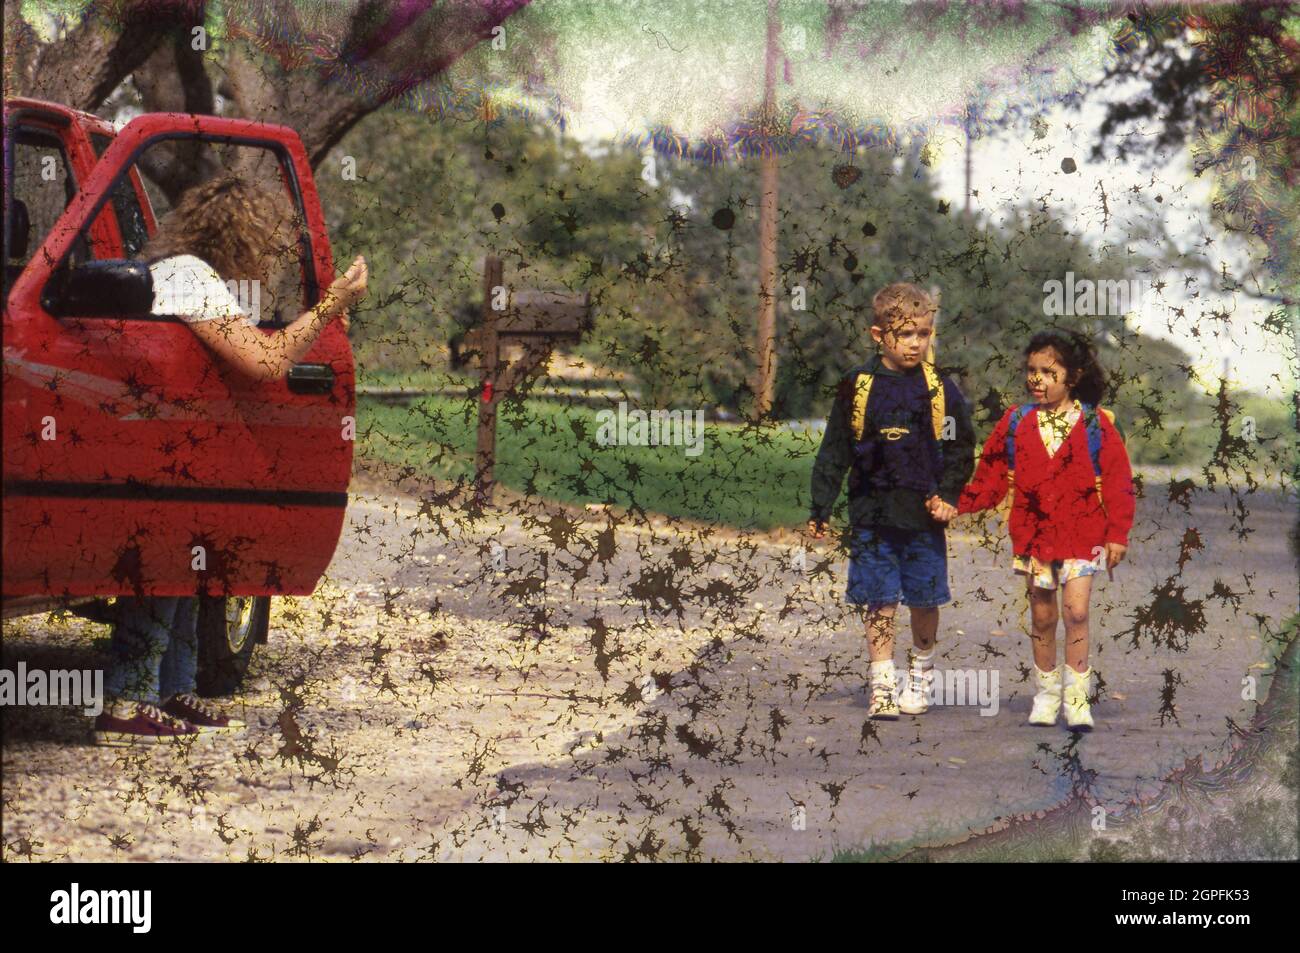 Austin Texas USA, circa 1994: Stranger Danger: Third graders walking home from school avoid a stranger in a car, photo illustration.  MR EI-0319-321 ©Bob Daemmrich Stock Photo